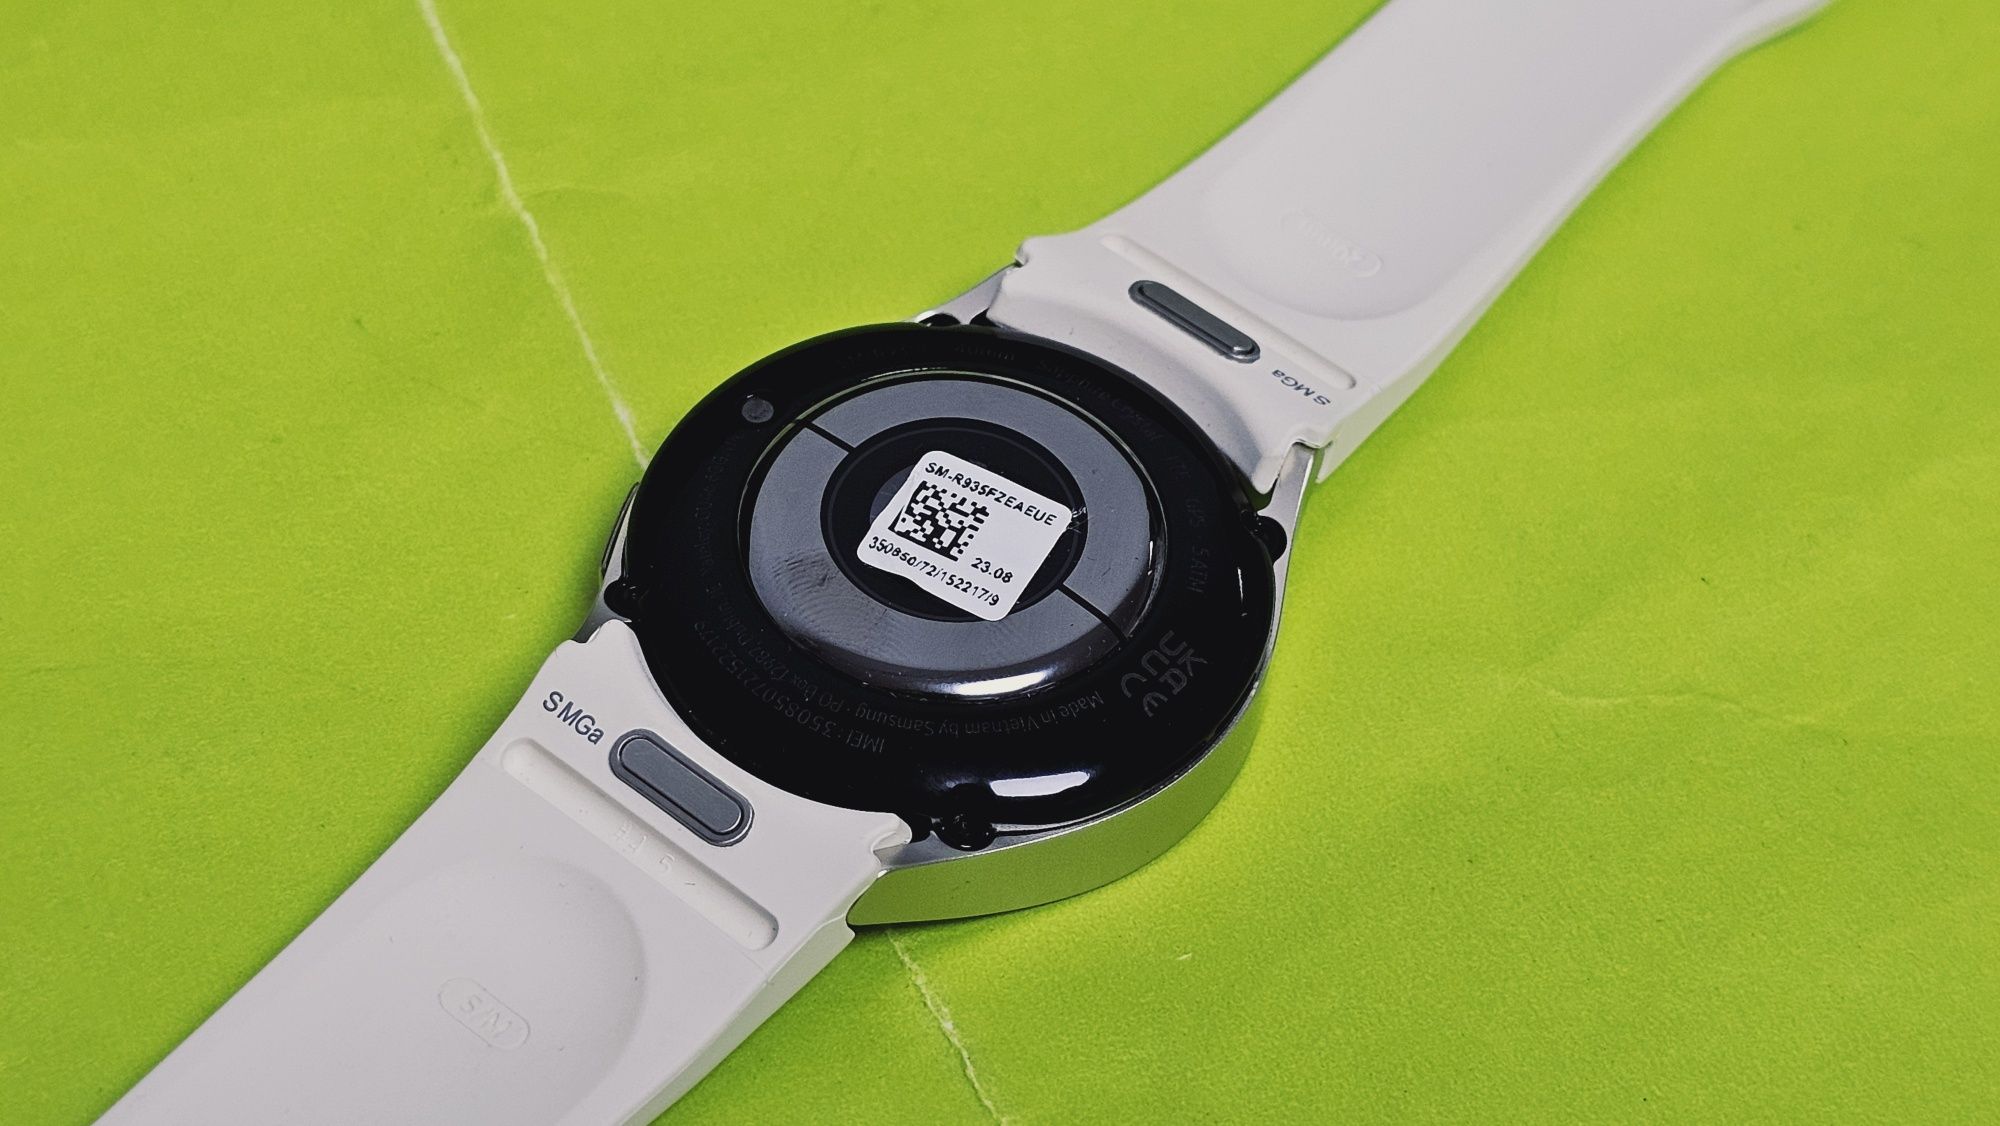 KATO HOВ 40mm Samsung Watch 6 LTE e-sim Гаранция Yettel 2025 Gold